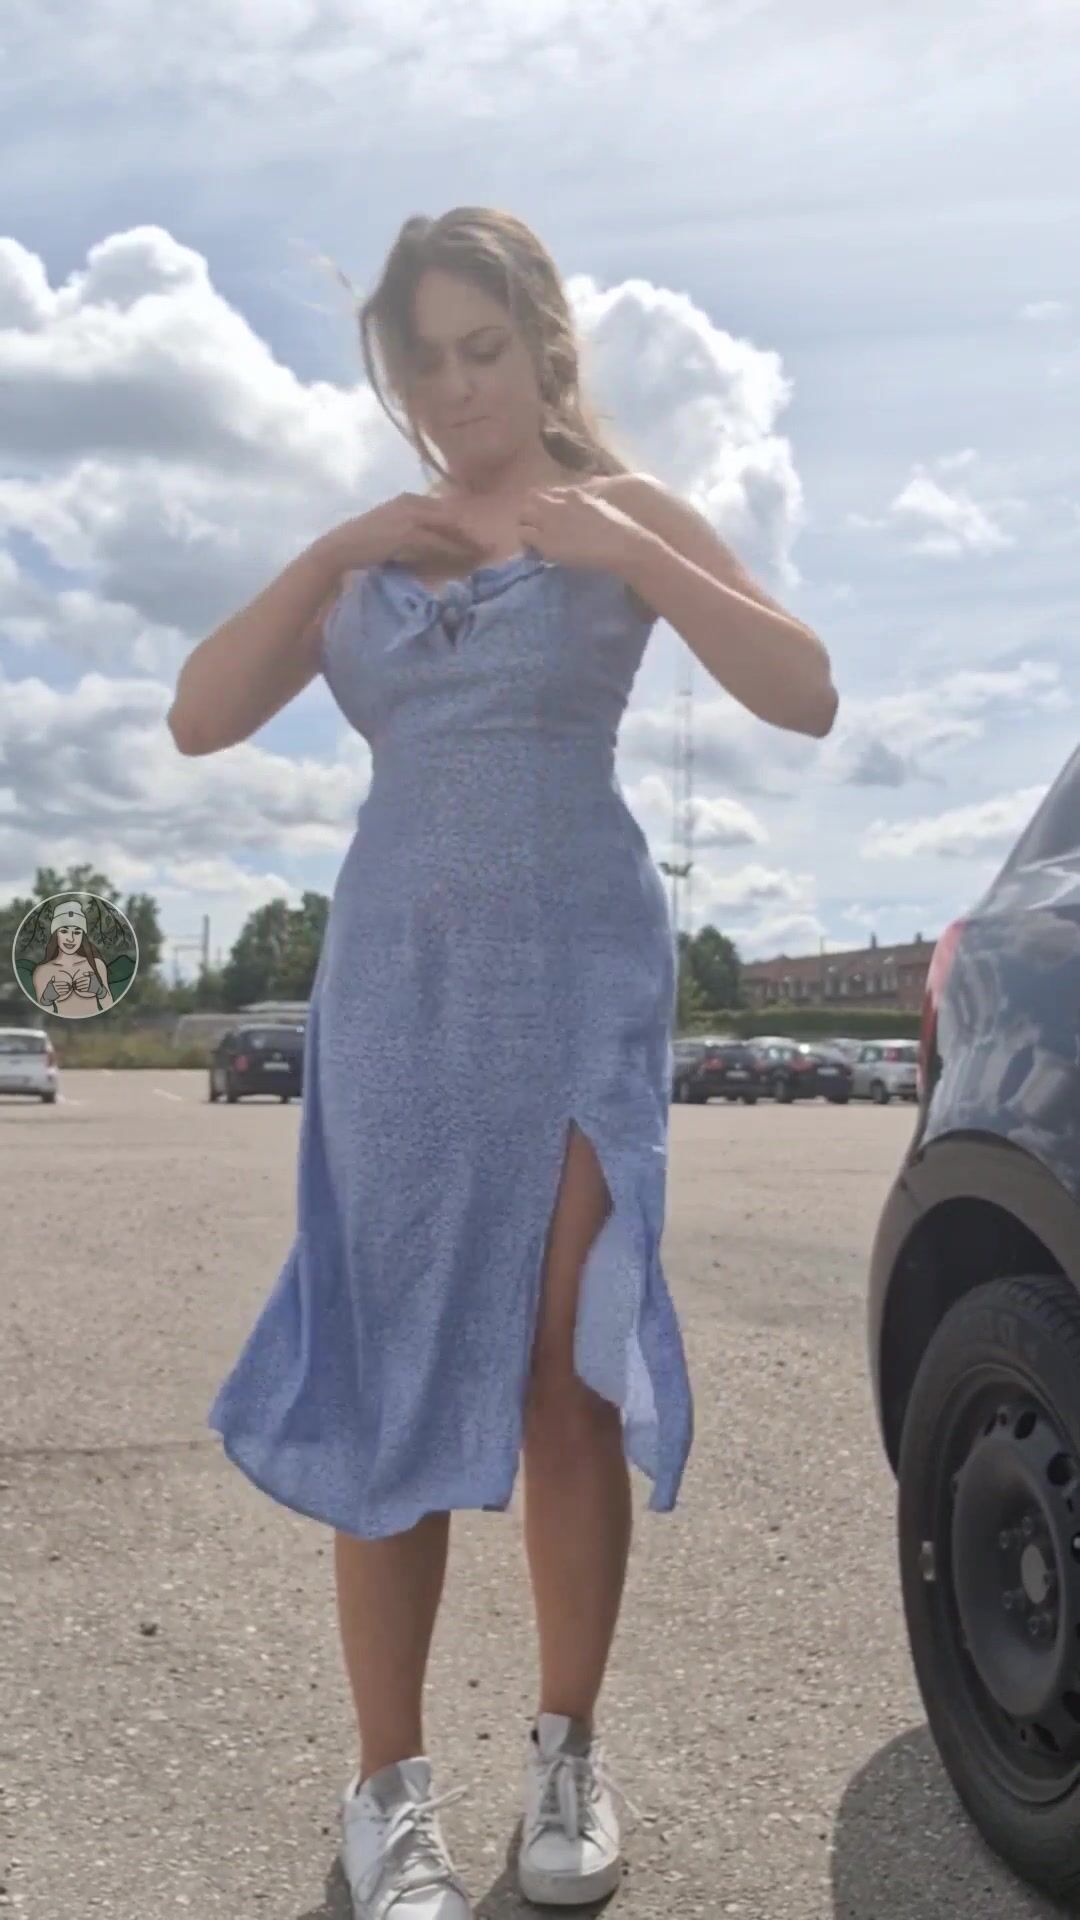 HotGirlMeg Change Dress in carpark